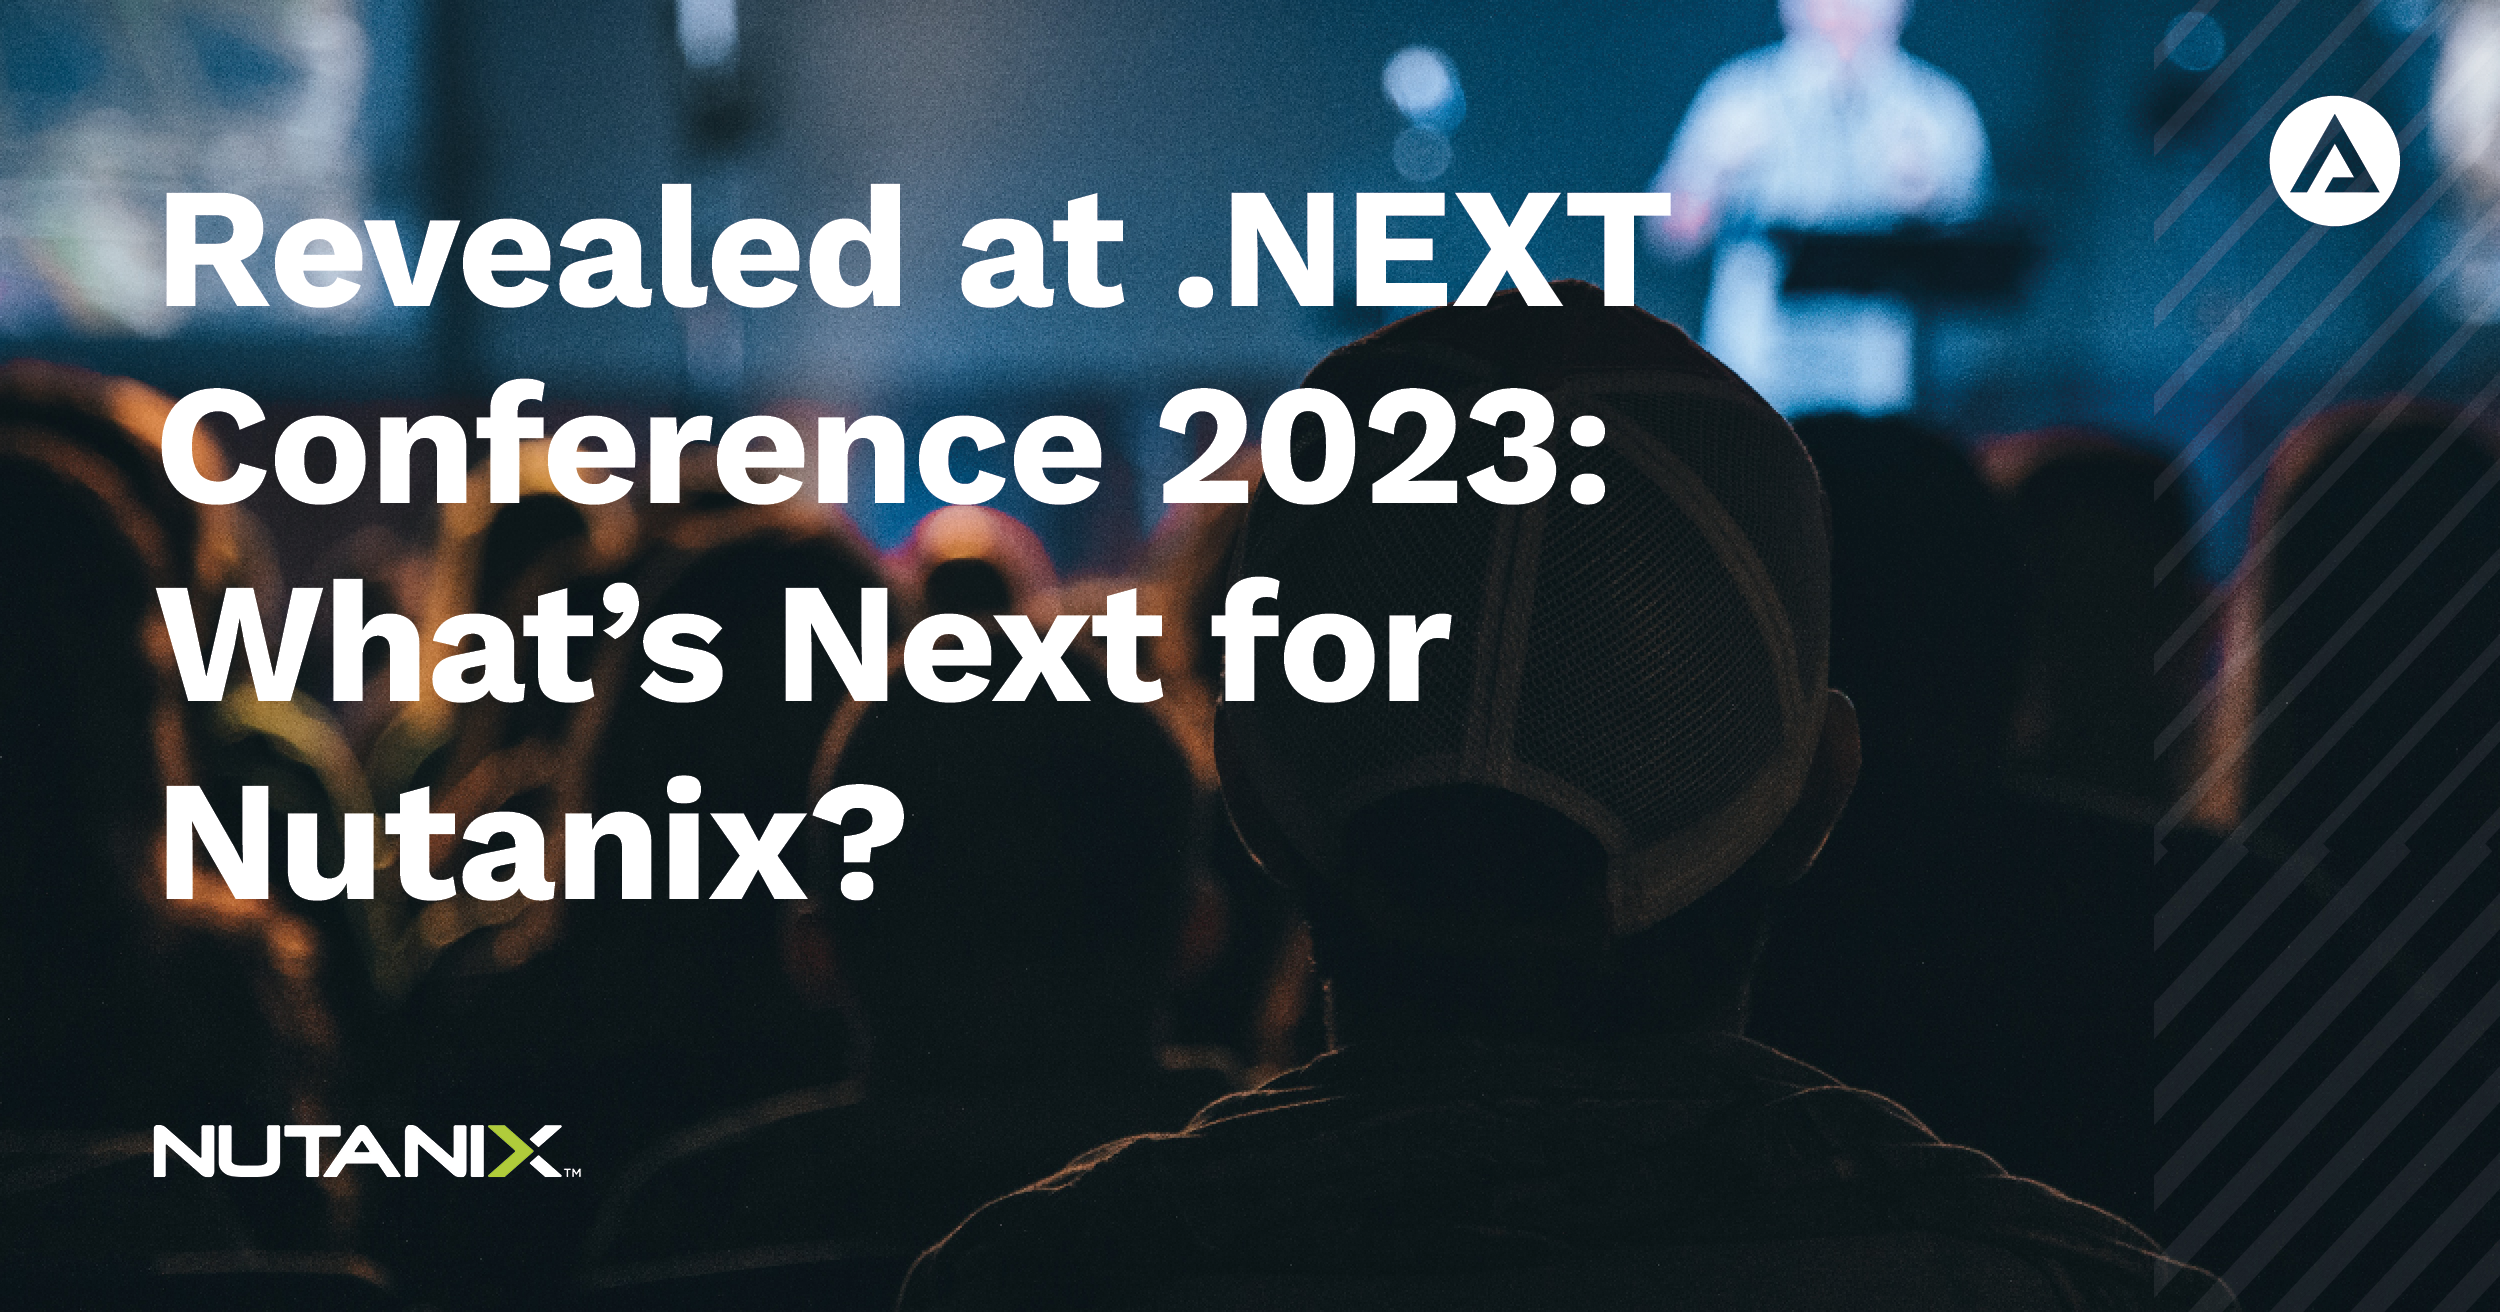 NEXT conference Nutanix 2023